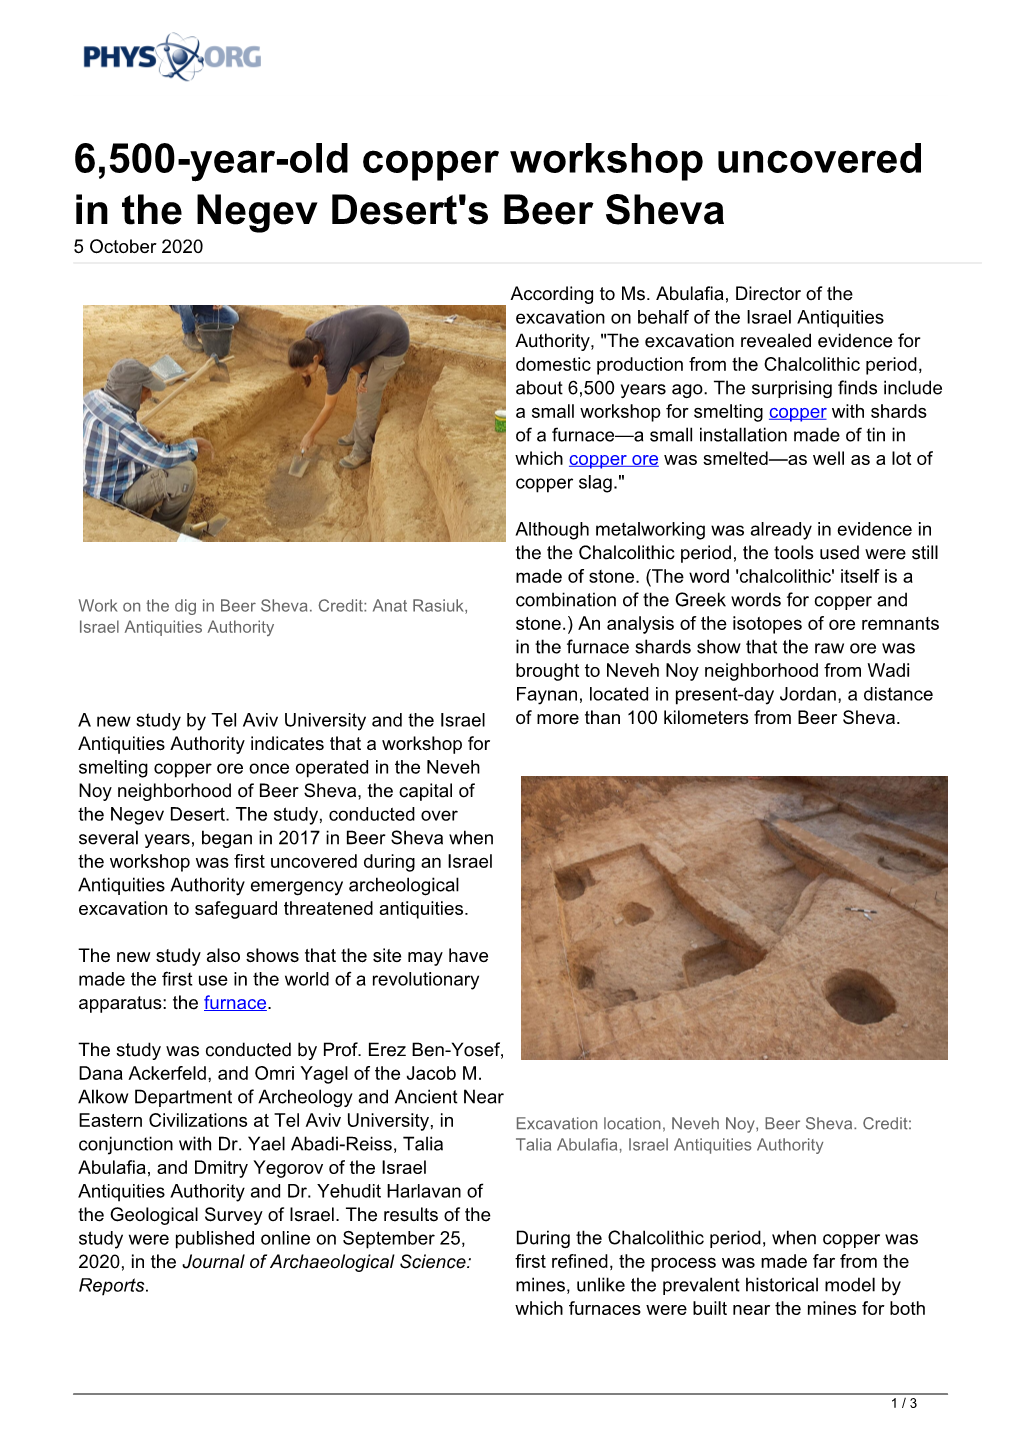 6,500-Year-Old Copper Workshop Uncovered in the Negev Desert's Beer Sheva 5 October 2020